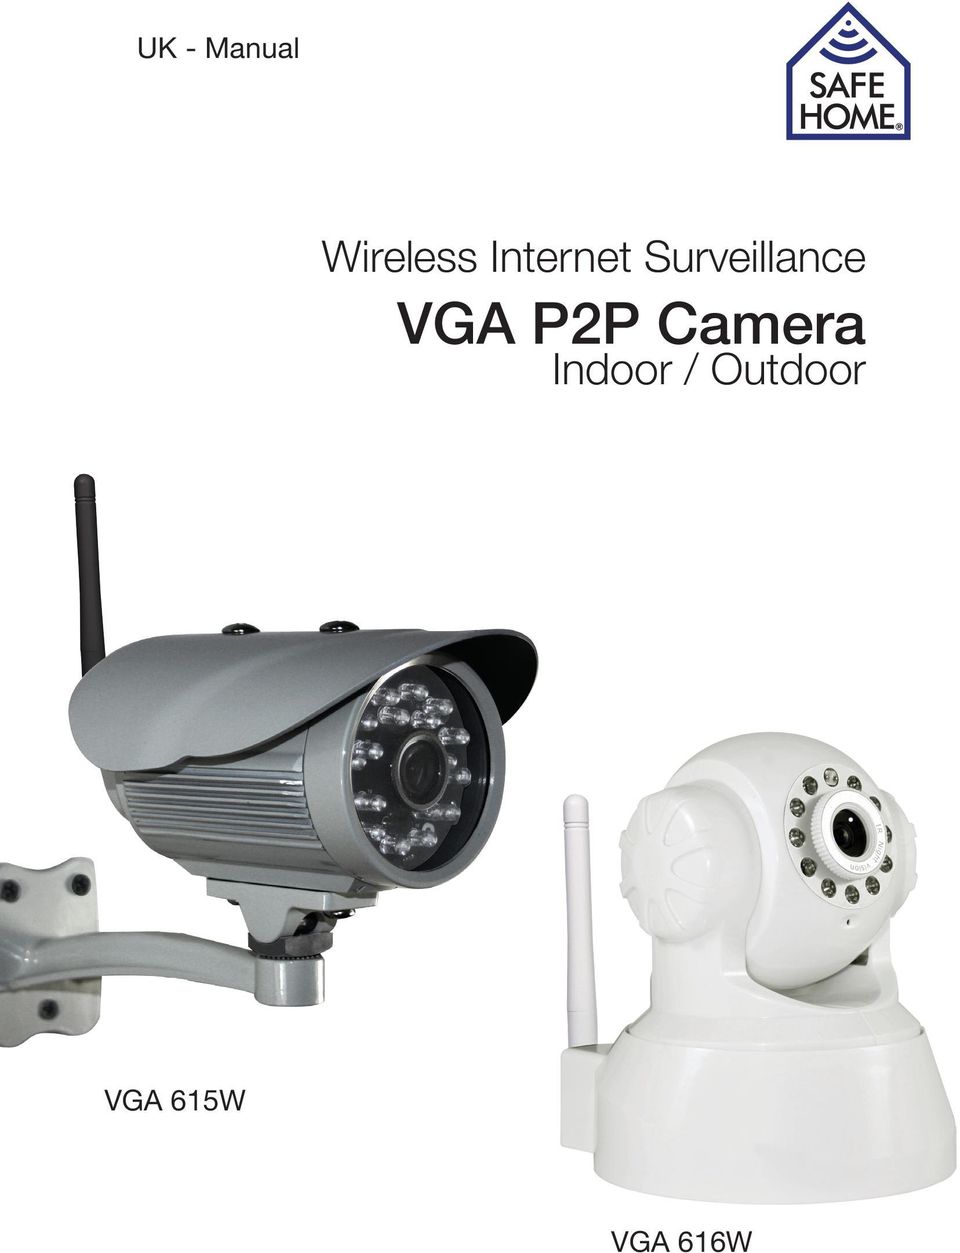 VGA P2P Camera Indoor